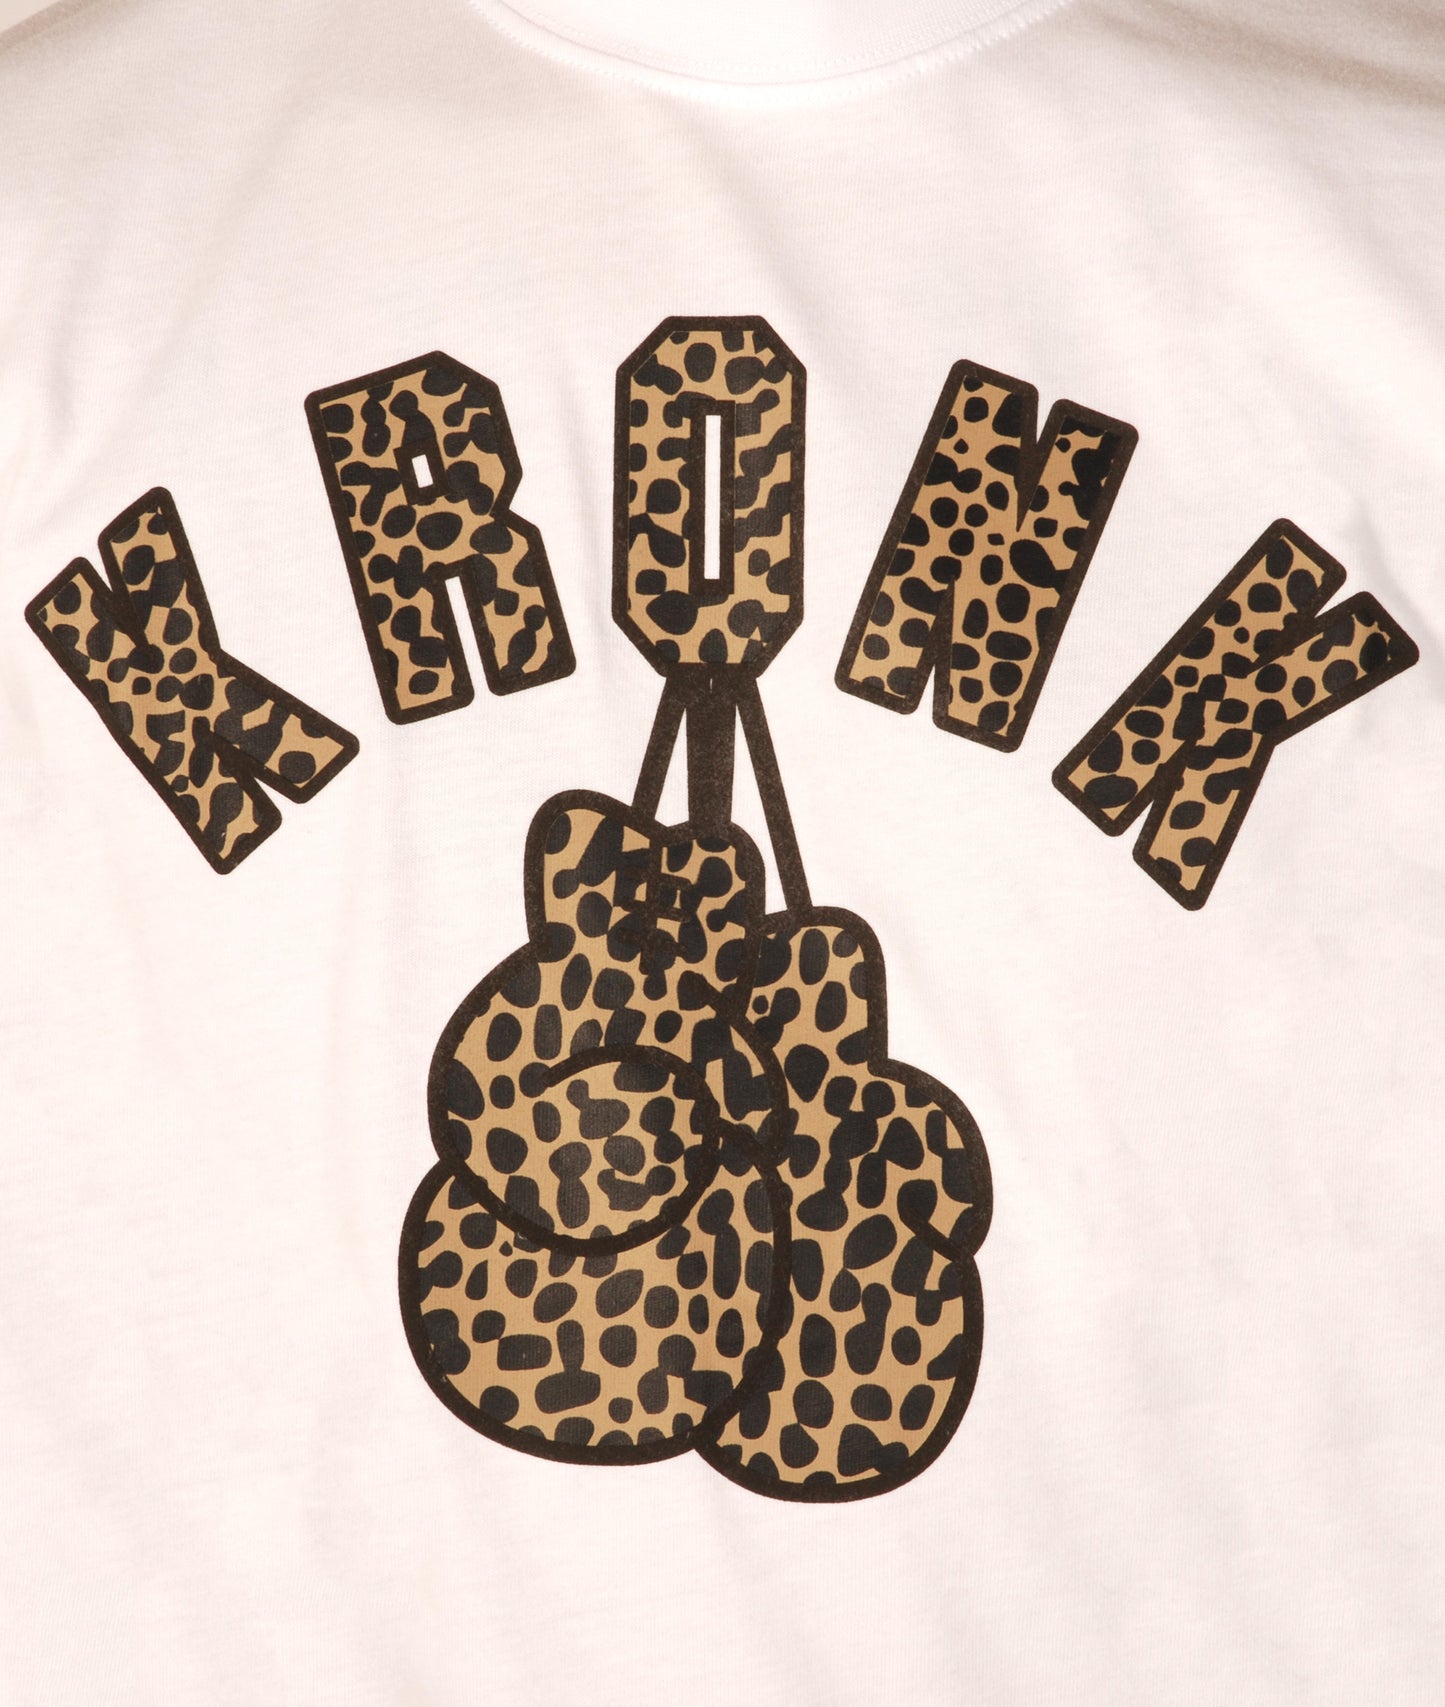 KRONK Leopard Print Gloves T Shirt White